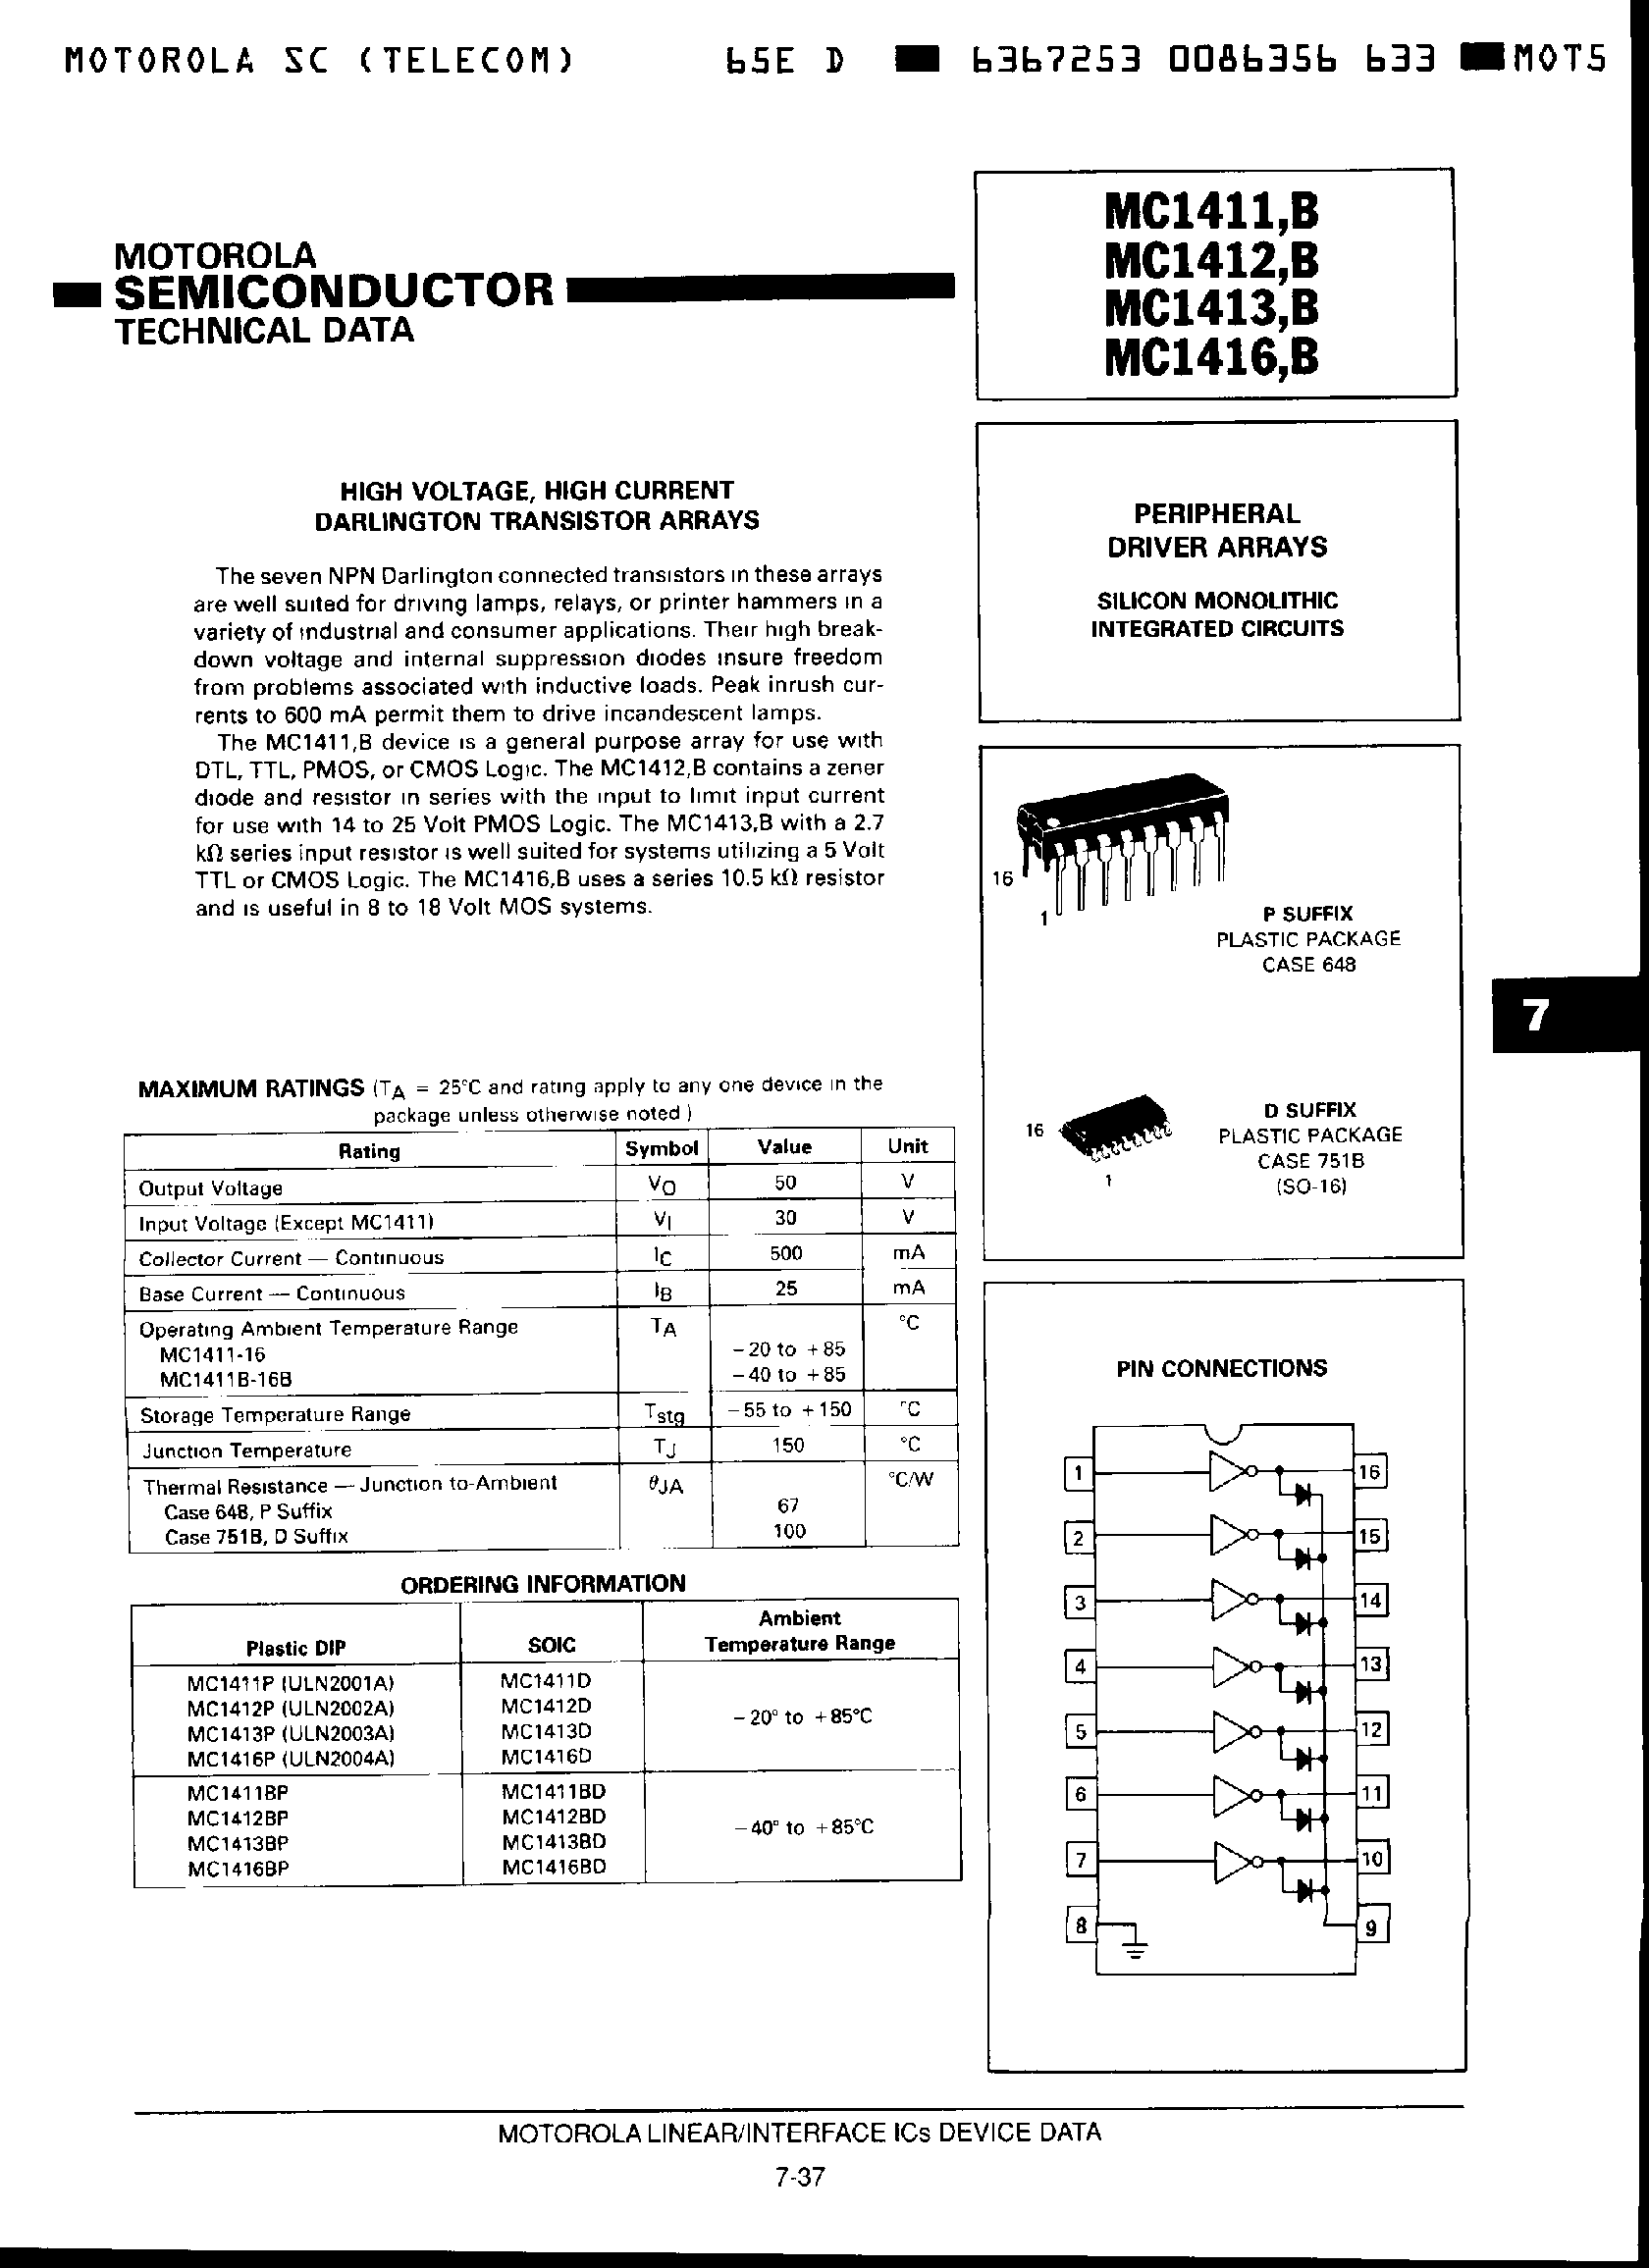 Datasheet MC1416BP - PERIPHERAL DRIVER ARRAYS page 1